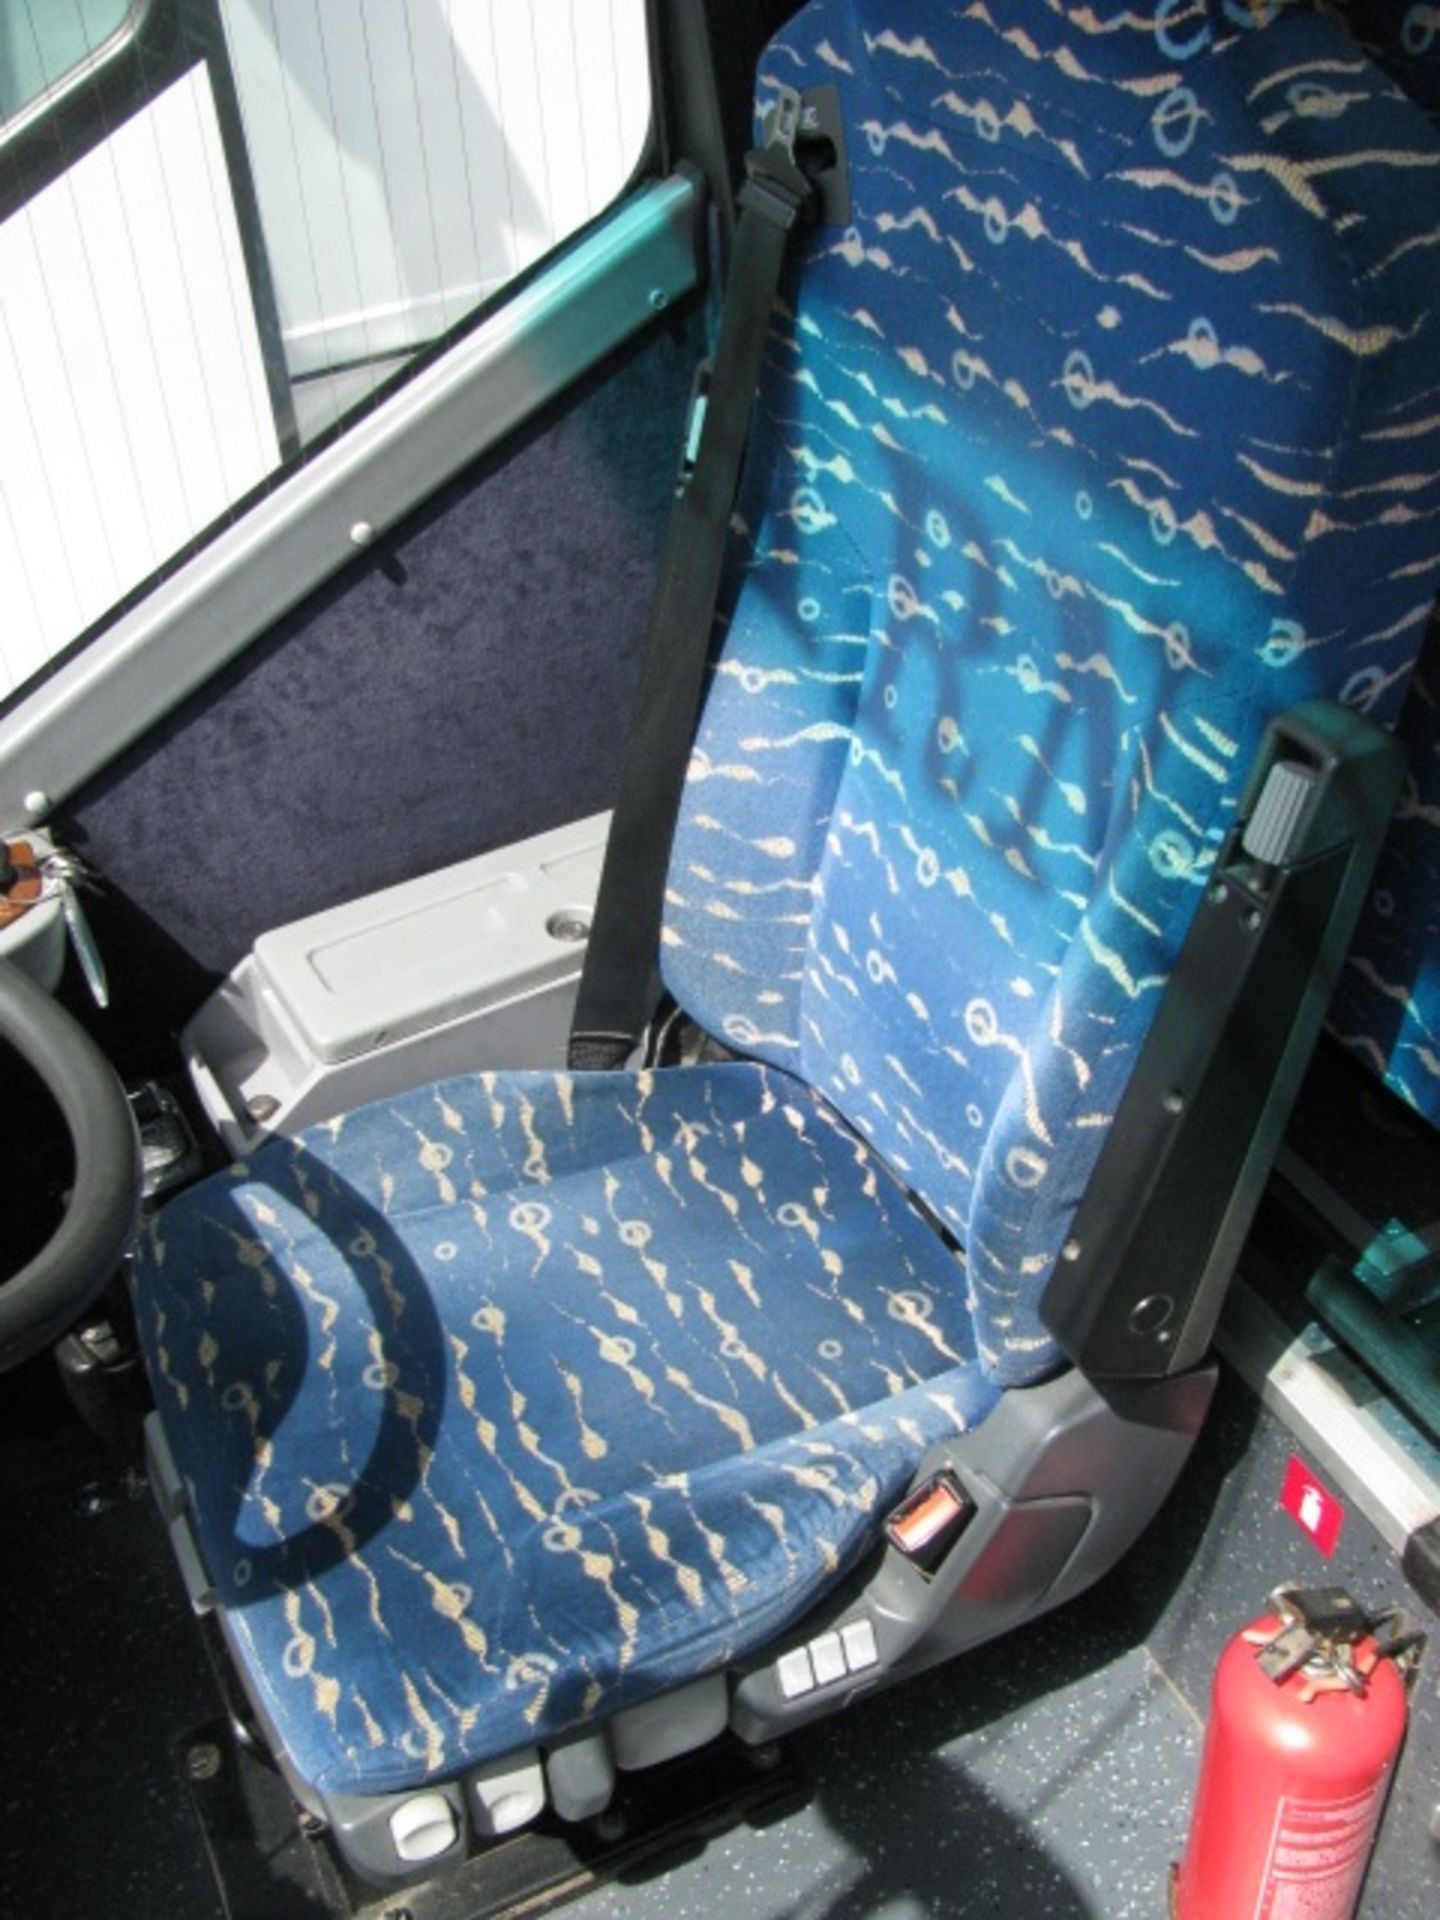 VDL Bova Futura FHD127.365 highline integral luxury coach - Image 6 of 15